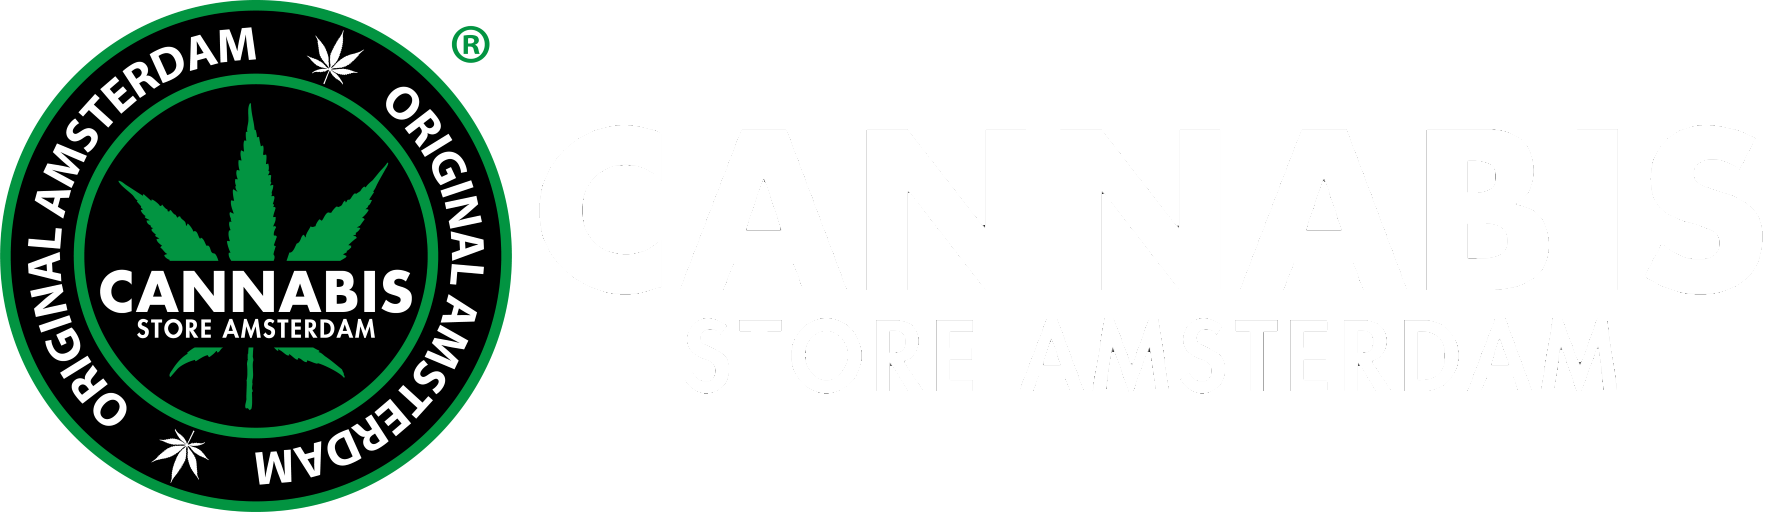 Cannabis Store Amsterdam - Malta